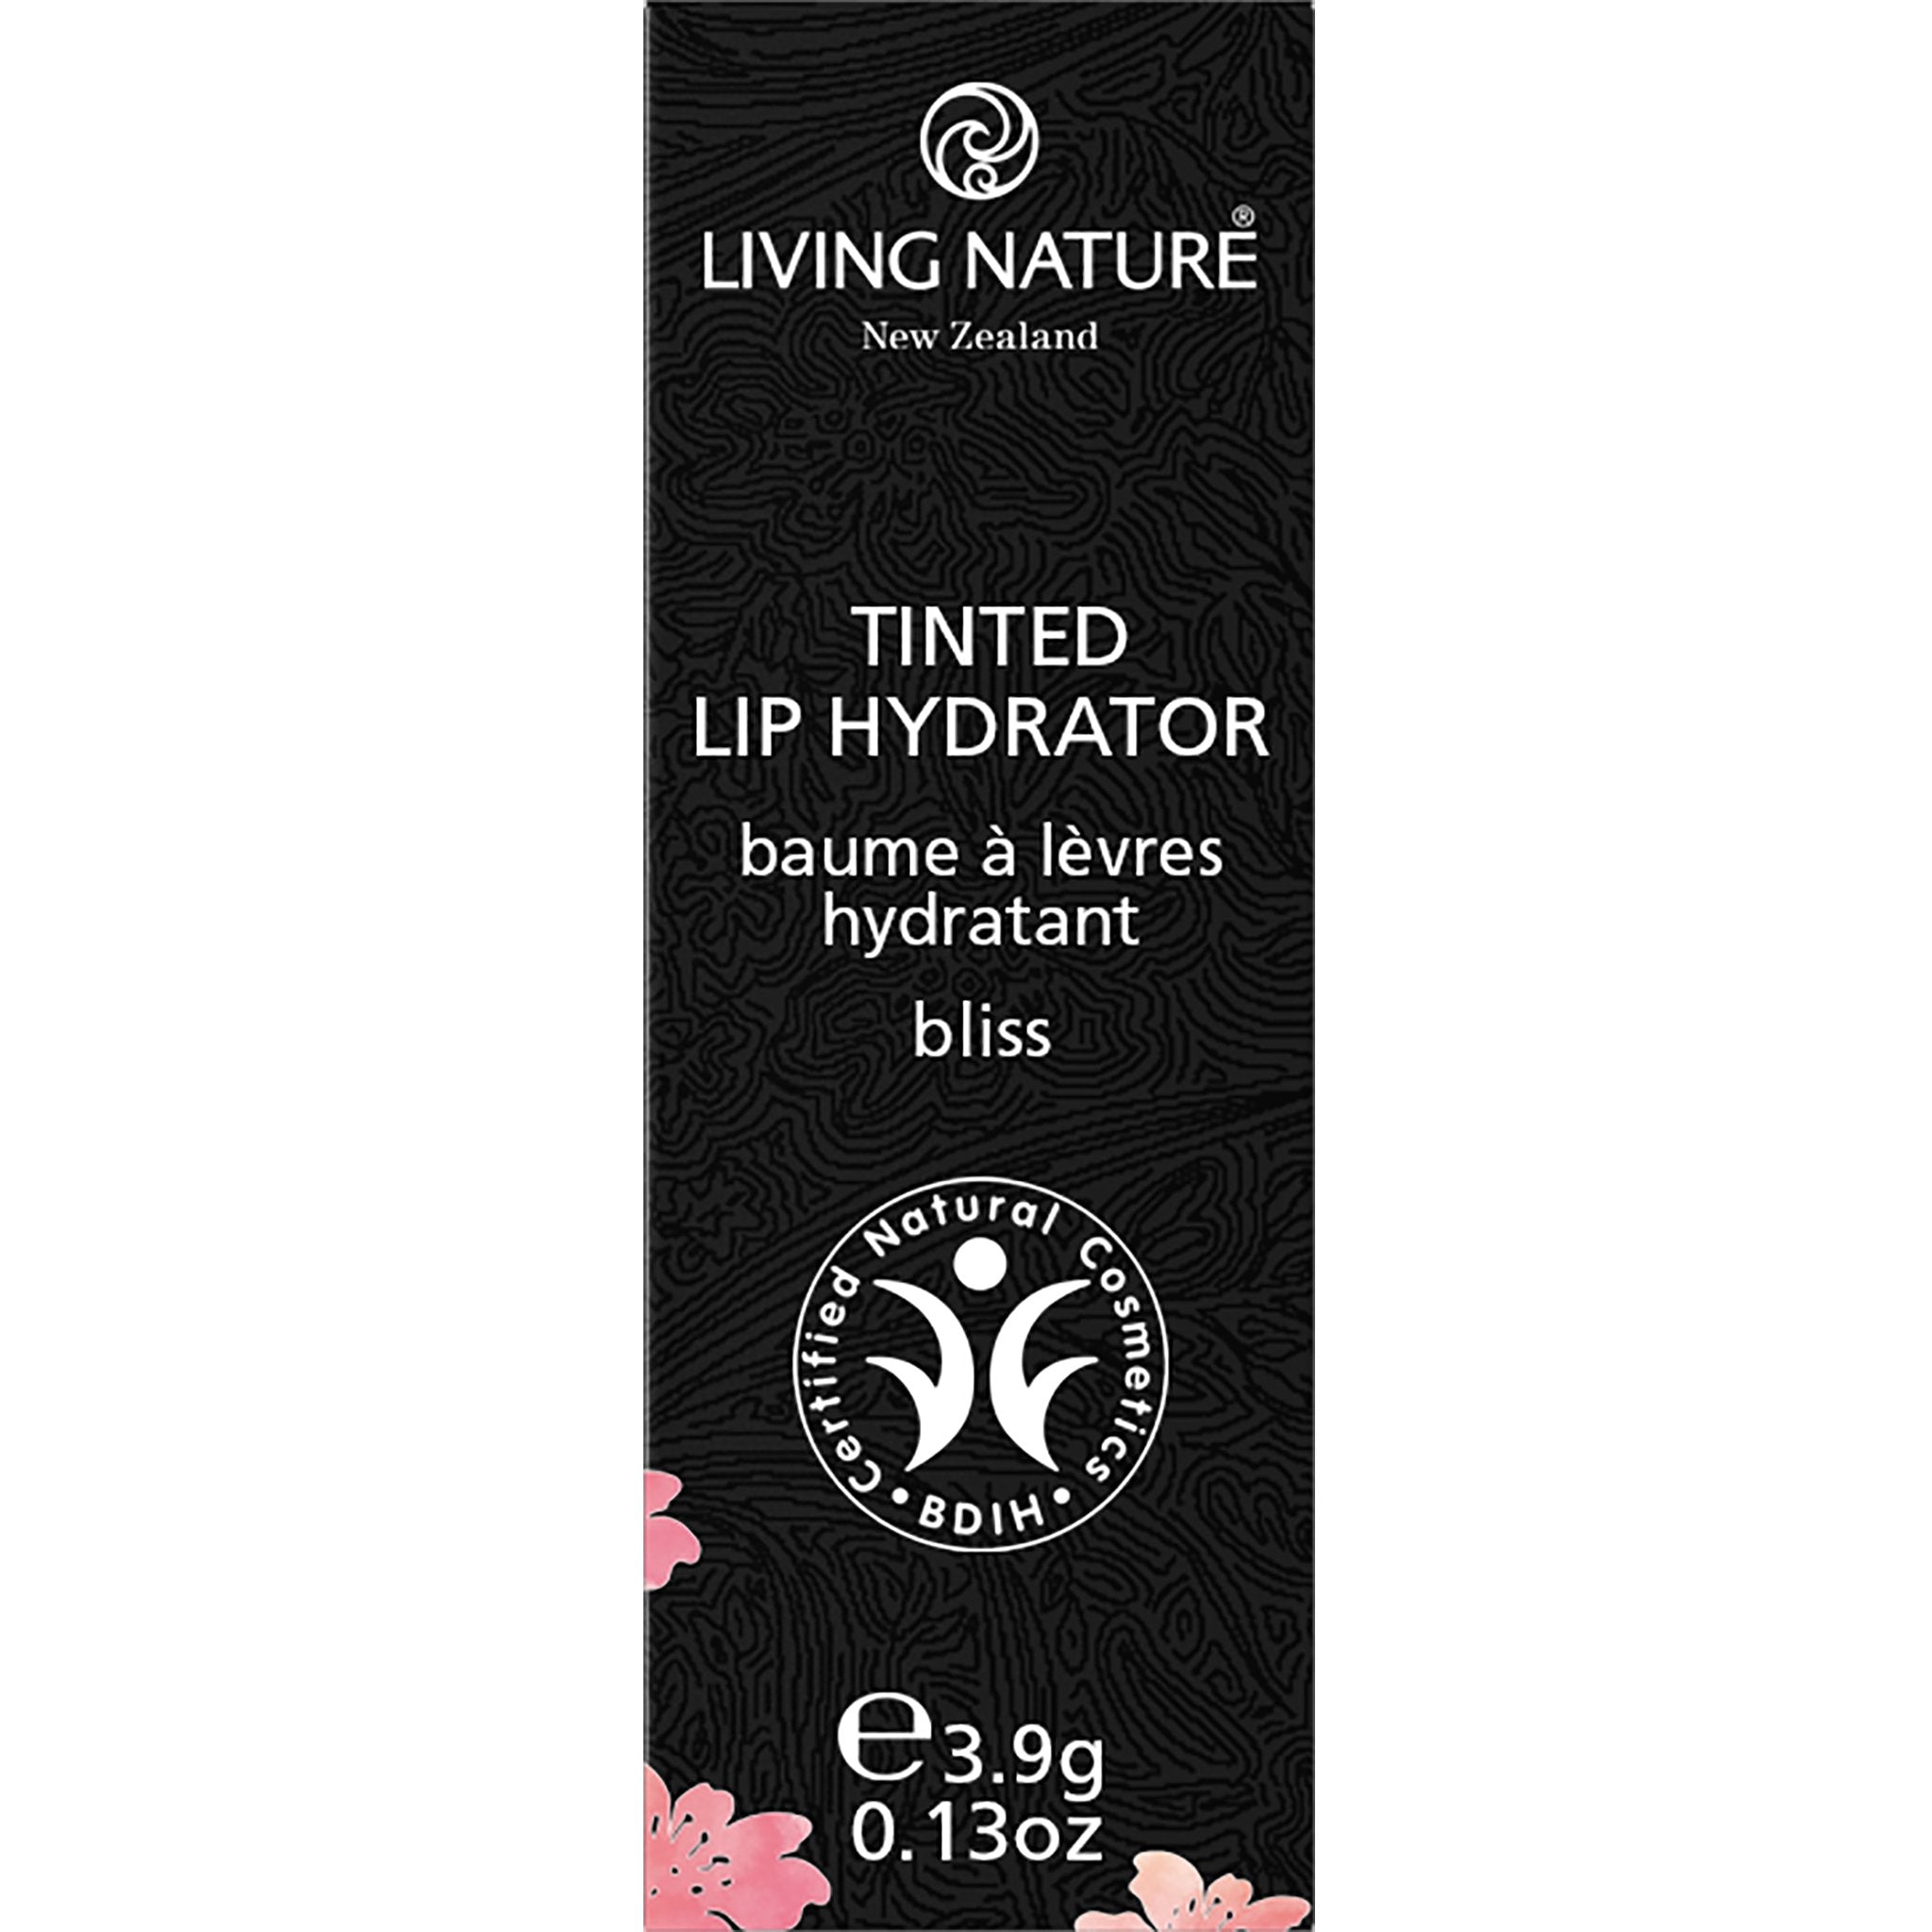 Bliss Tinted Lip Hydrator - mypure.co.uk